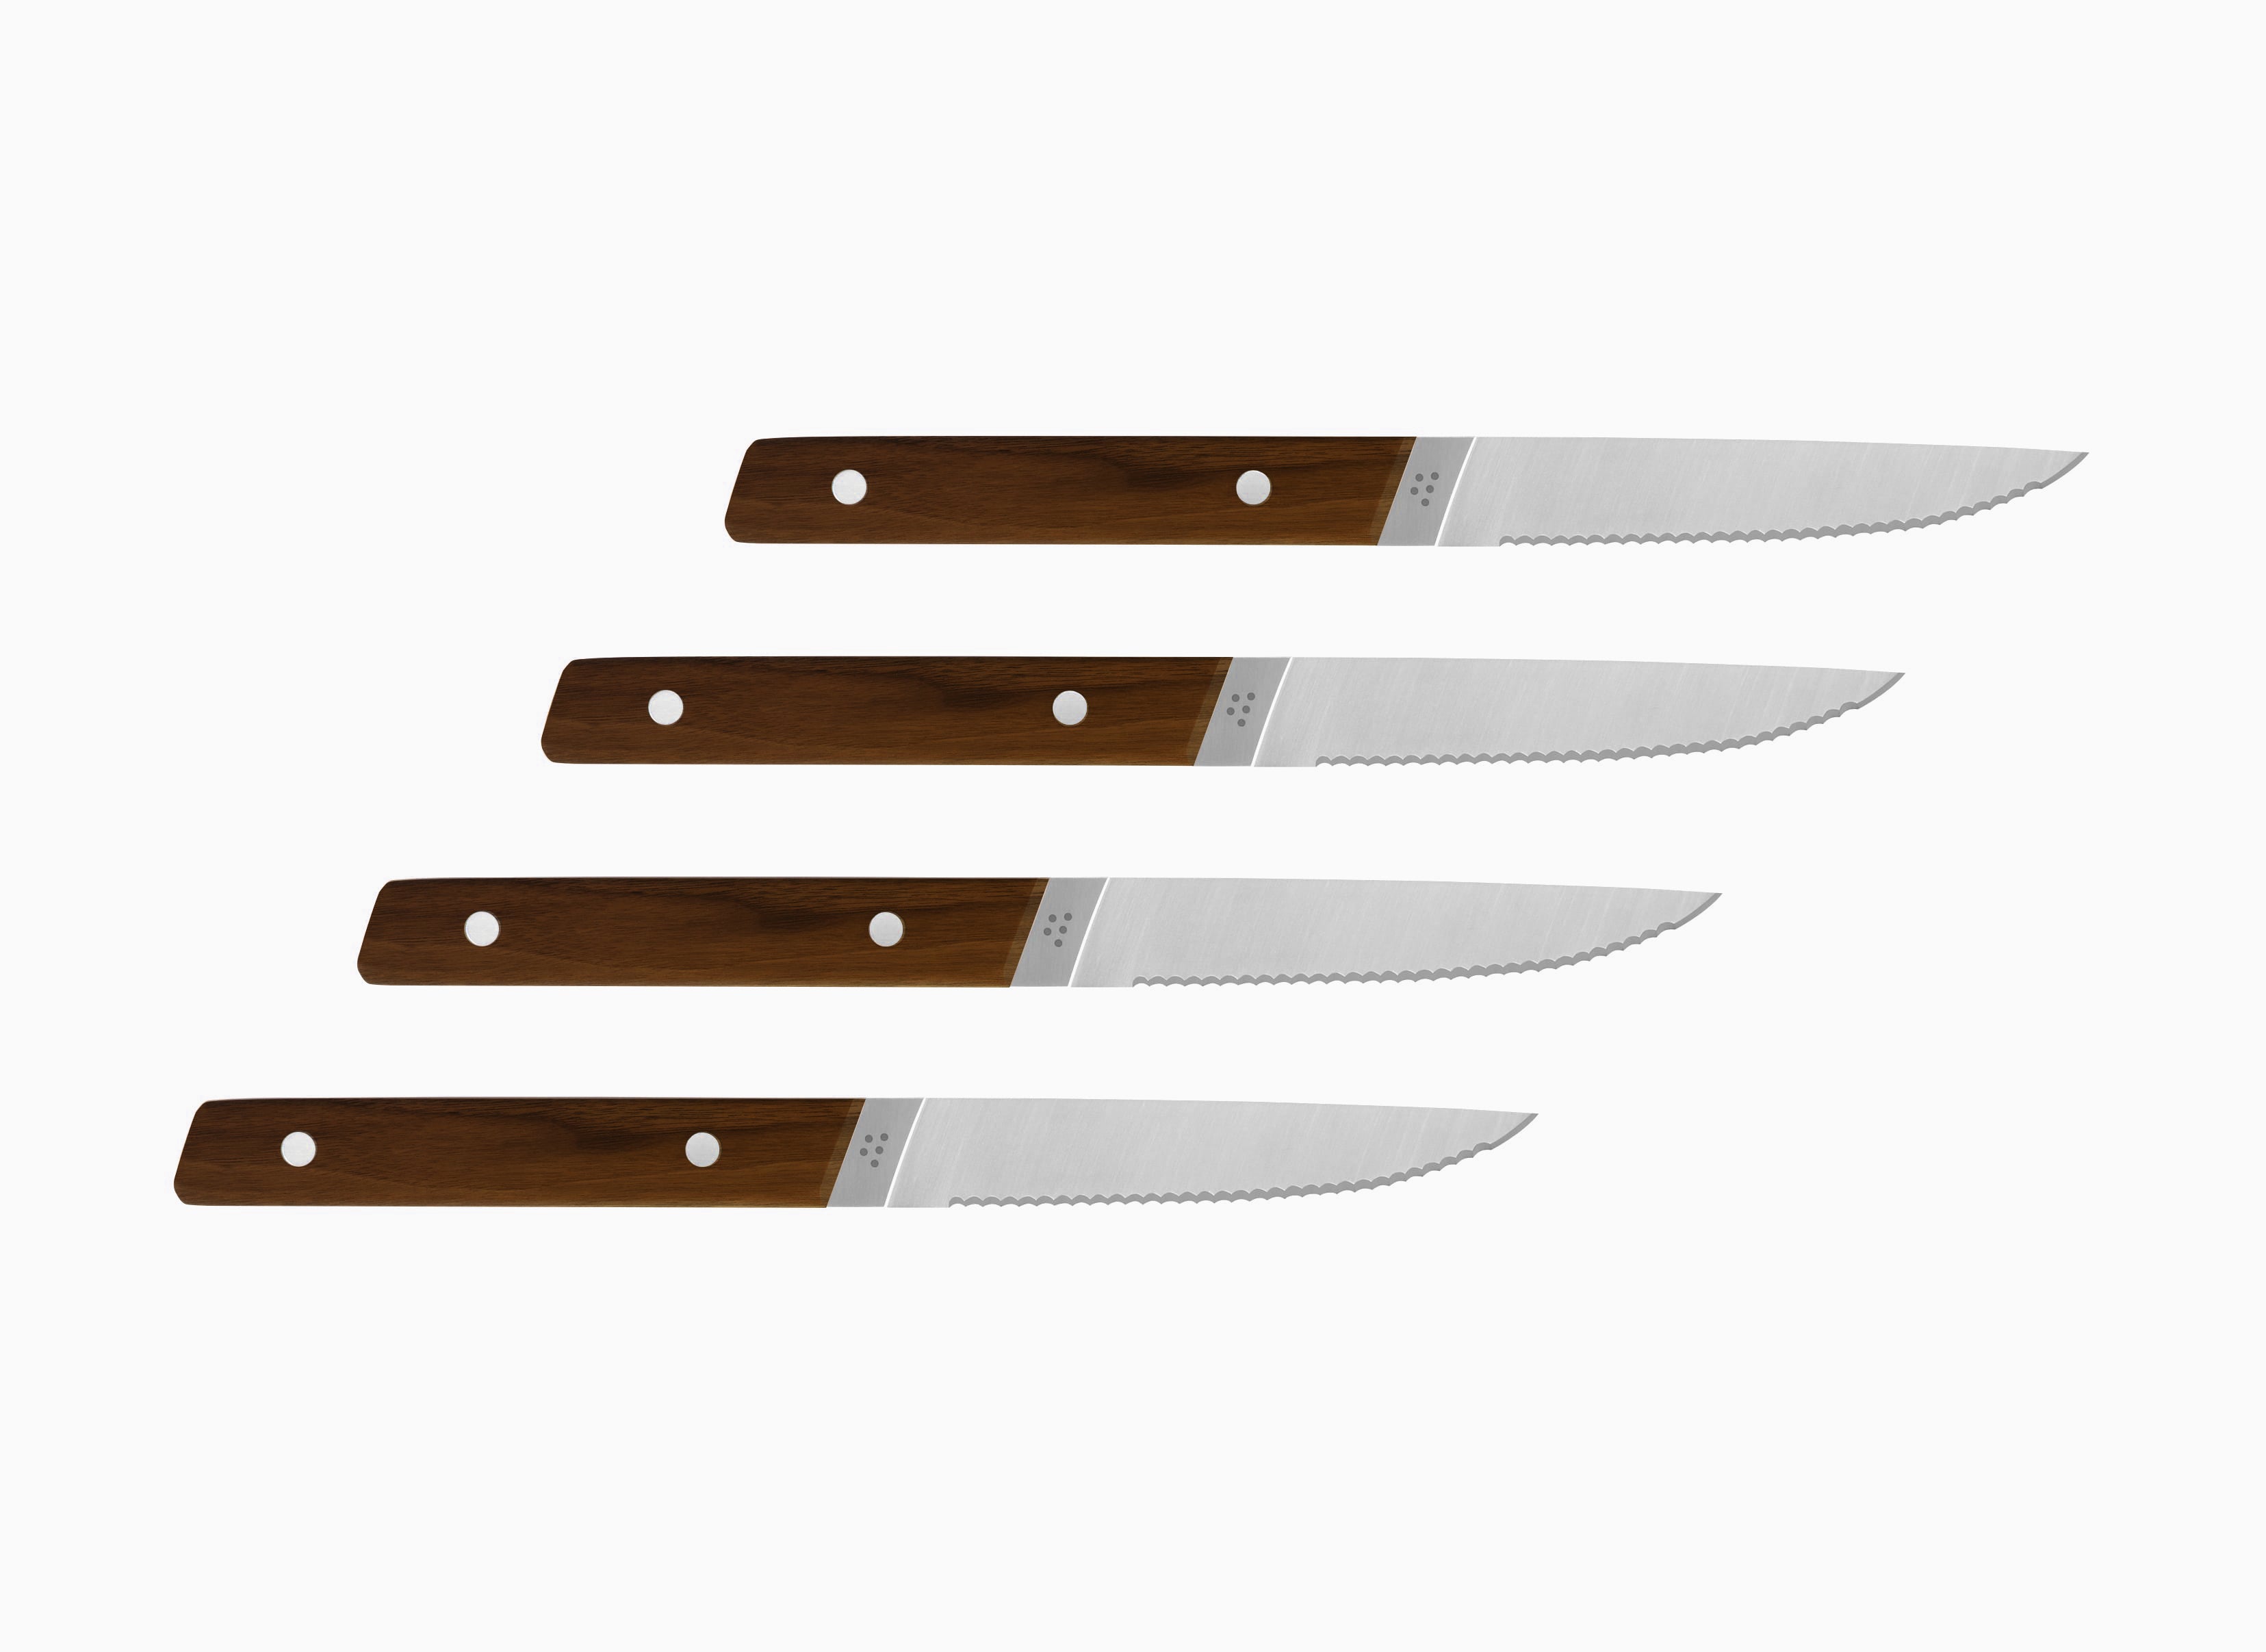 Oneida Preferred S/4 Steak Knives